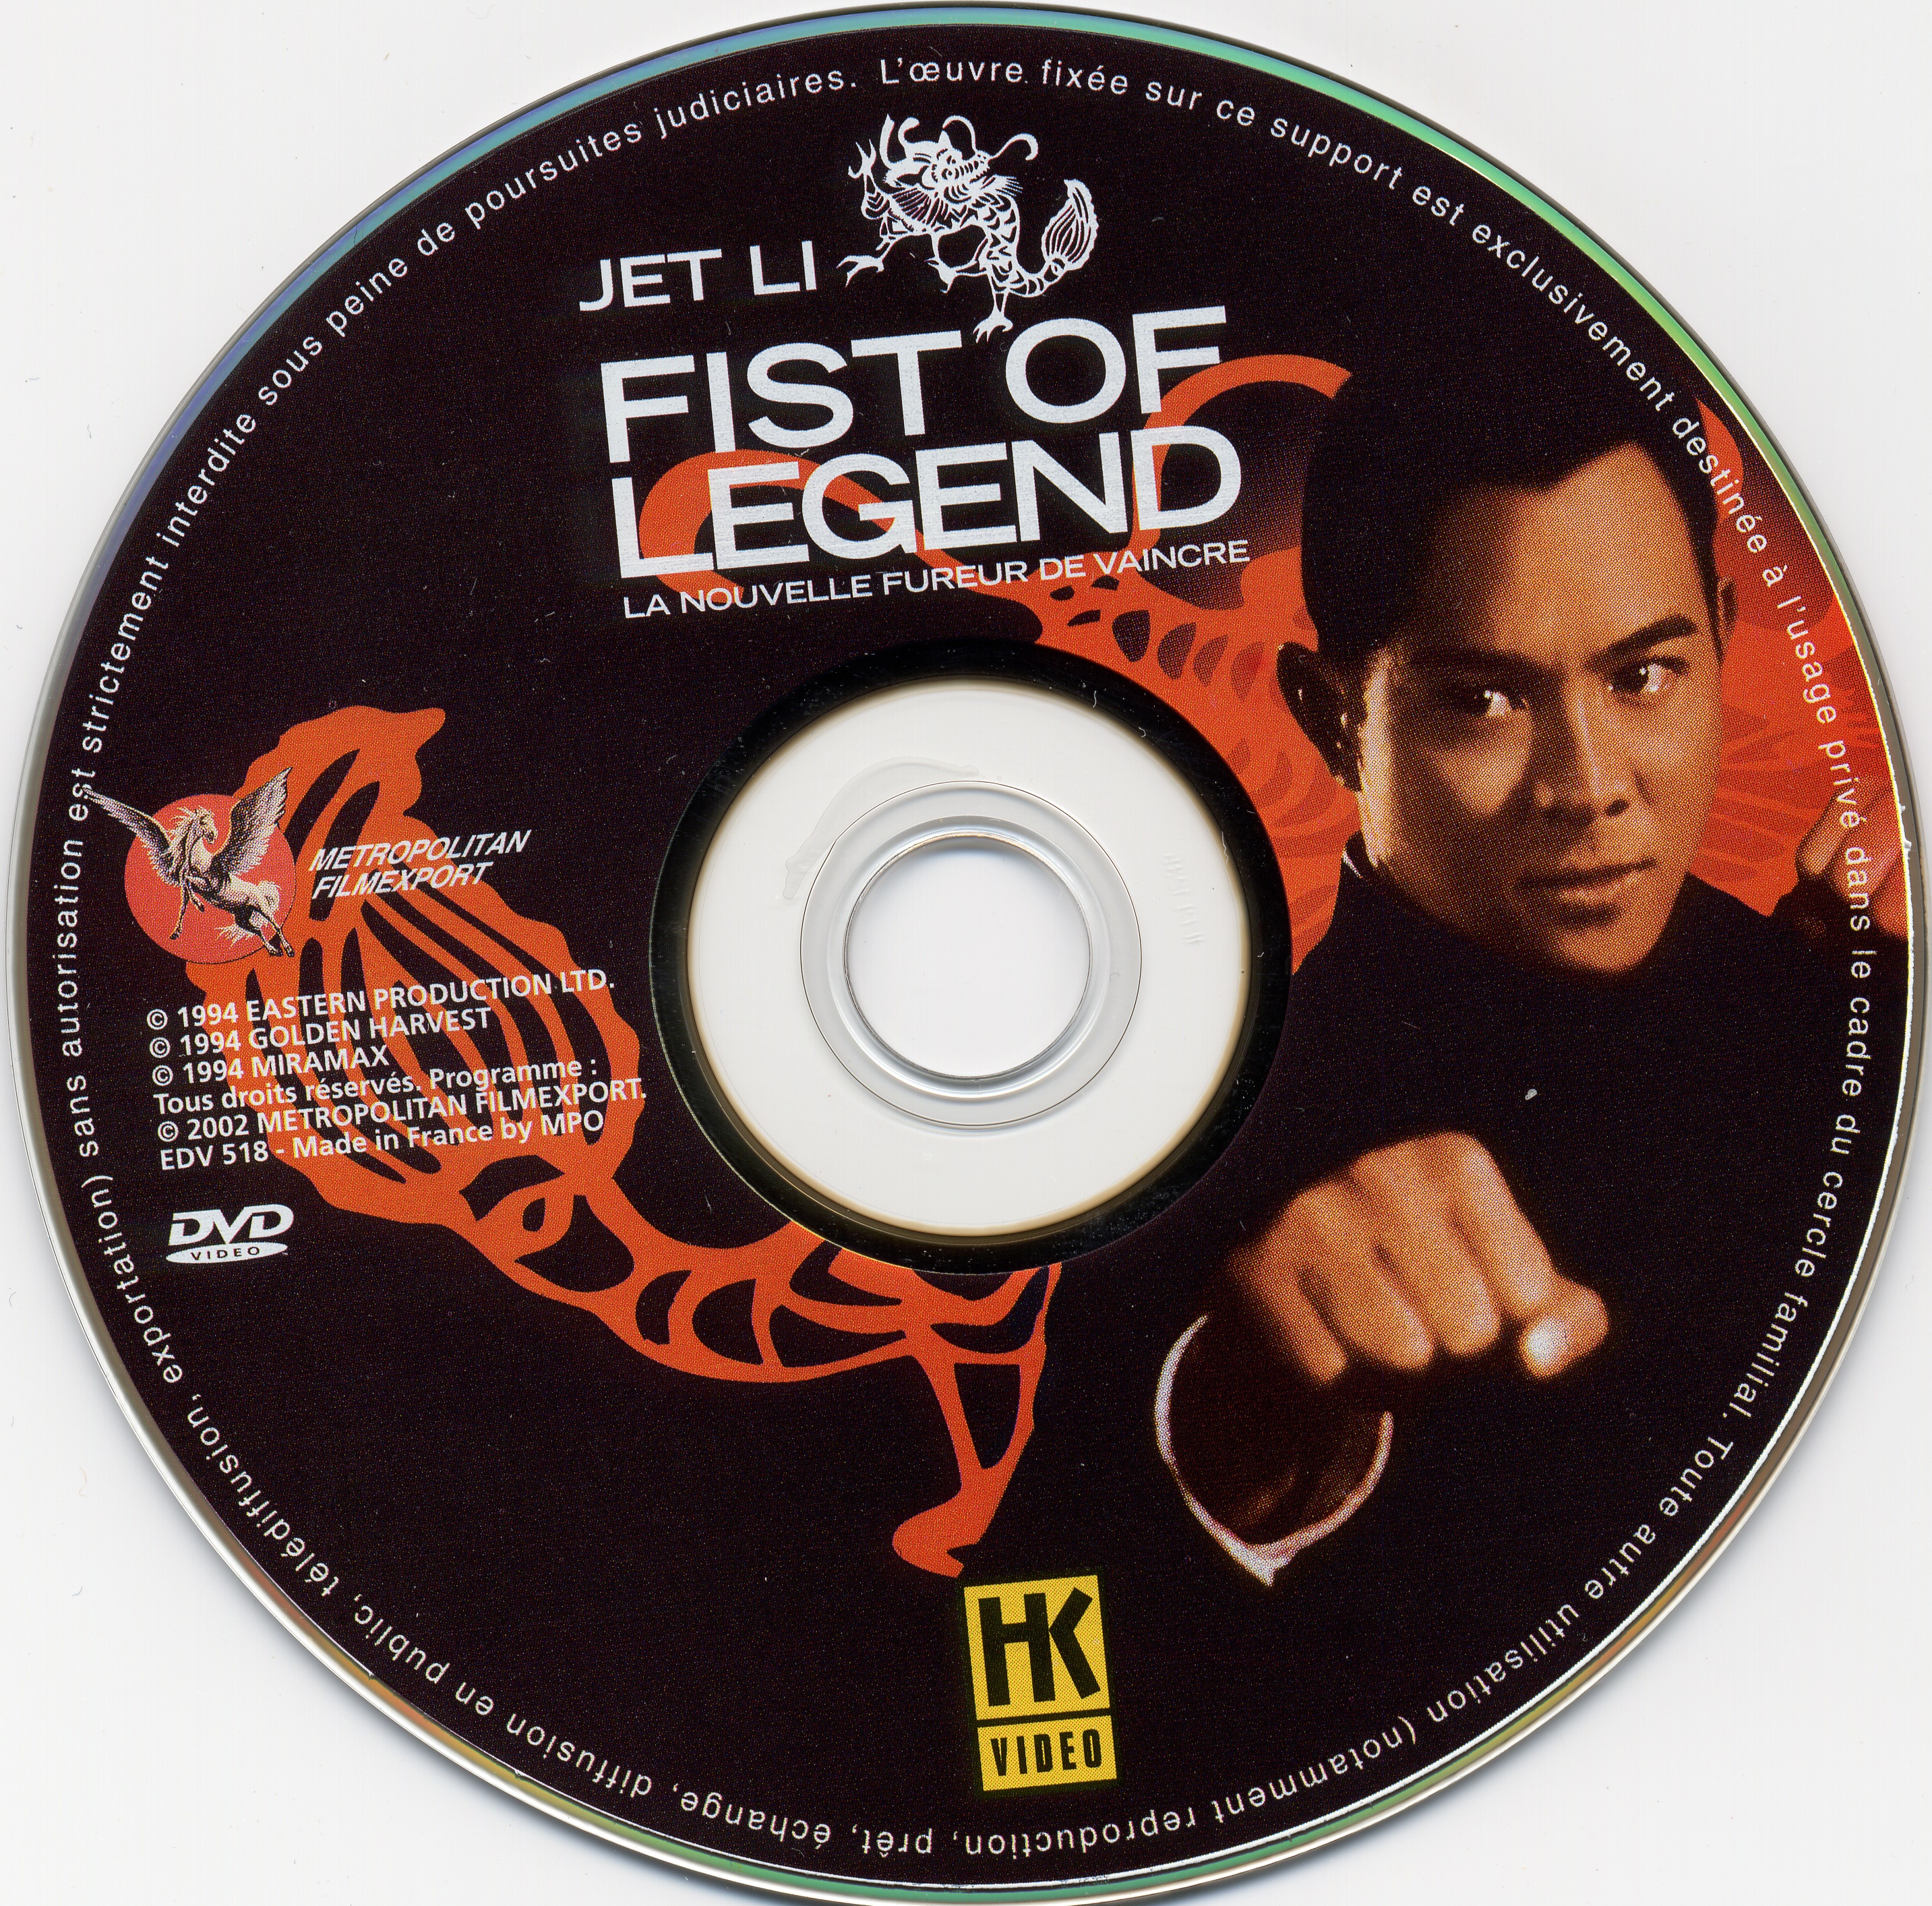 Fist of legend DISC 1